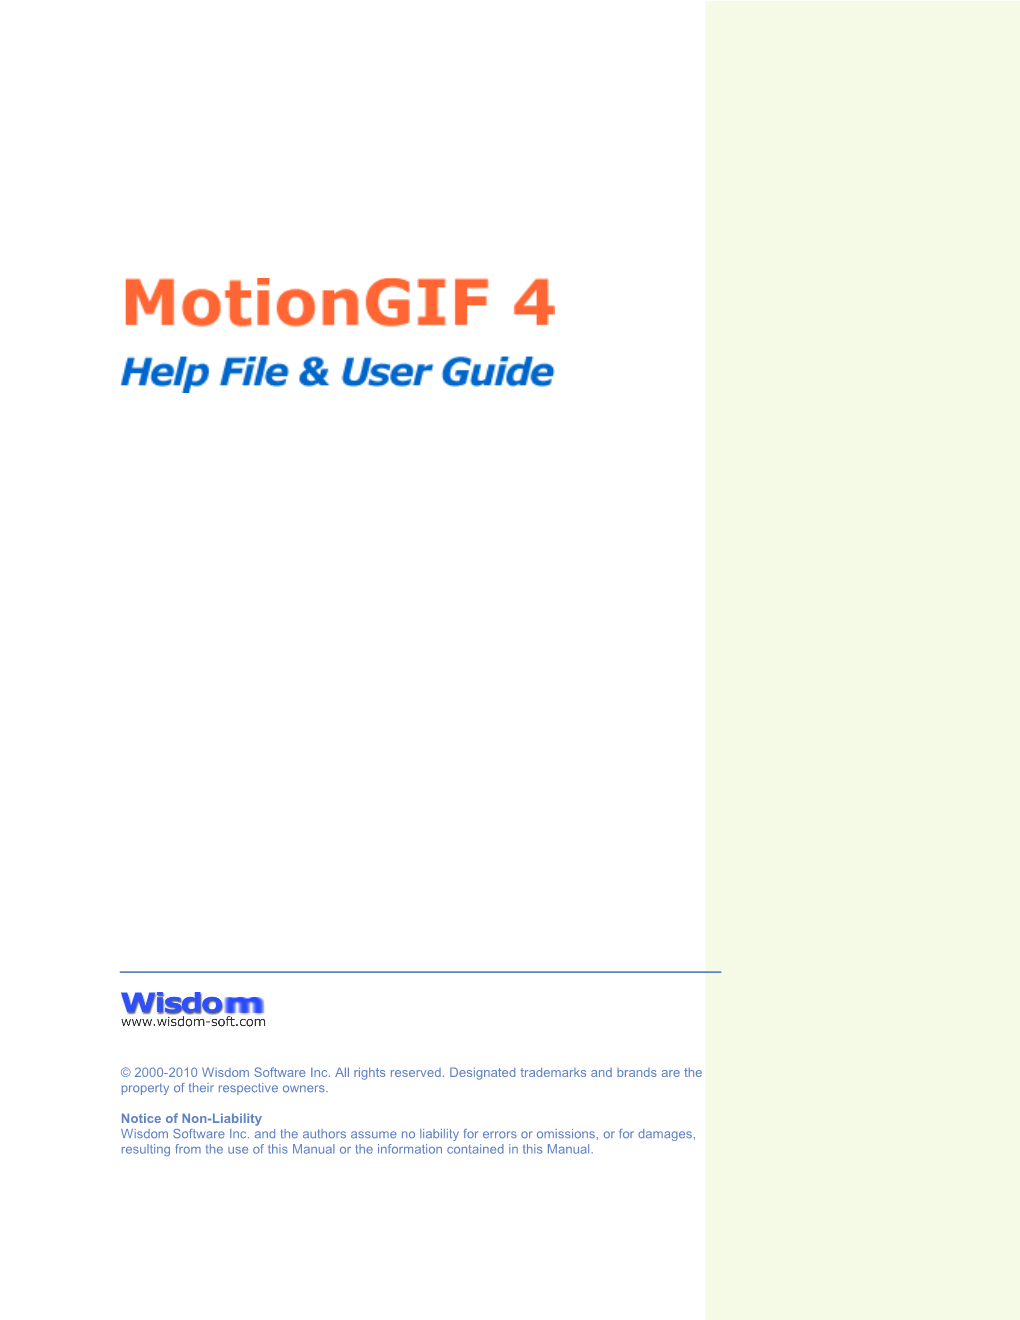 Motiongif Help File - User Guide